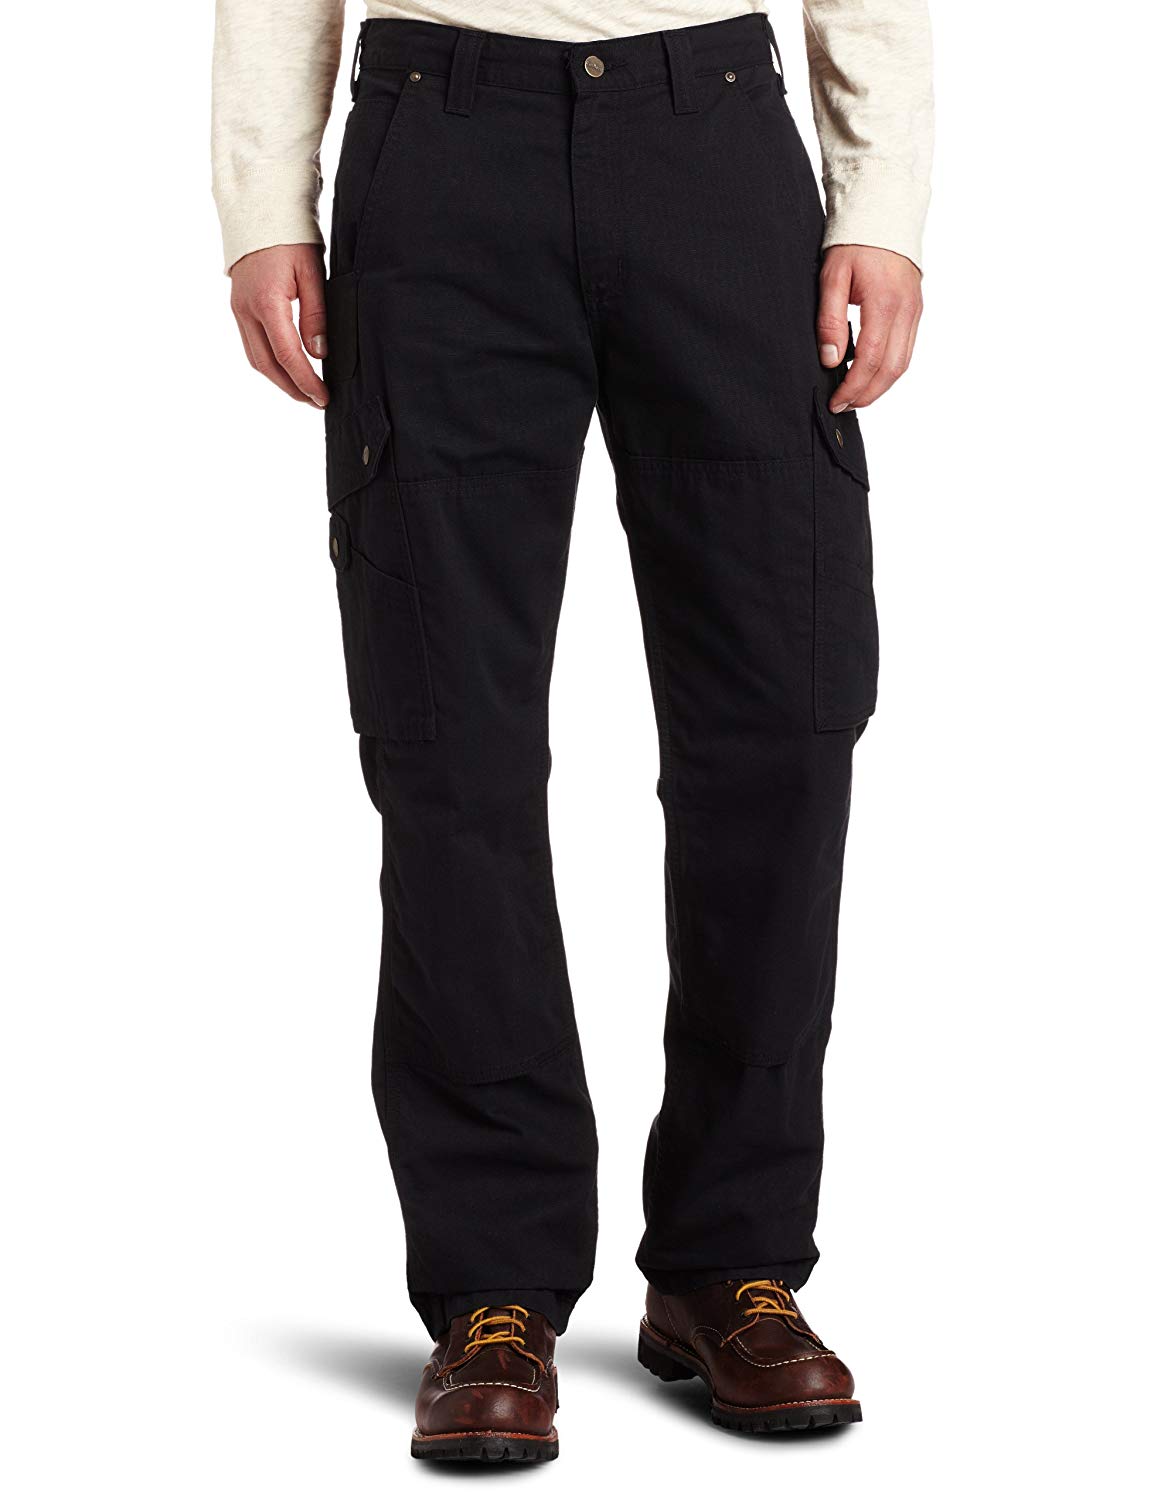 Carhartt Men's Ripstop Cargo Work Pant,Black,40W x 30L, Black, Size 40W ...